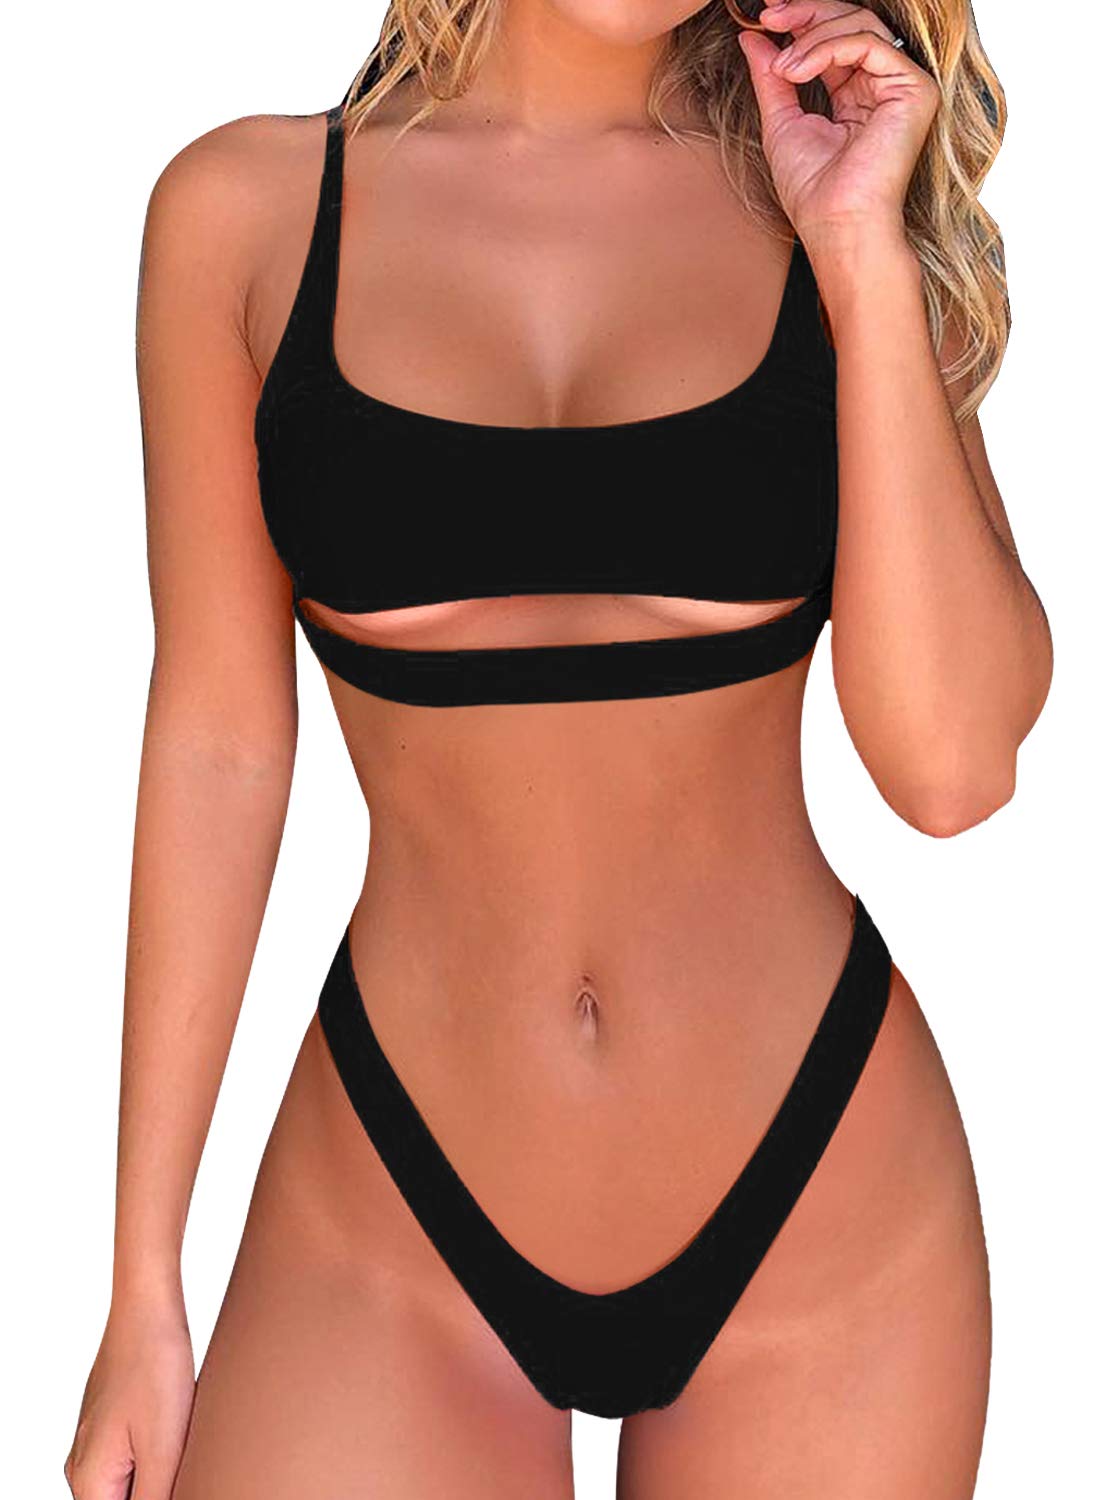 dana zein add photo underboob bathing suit